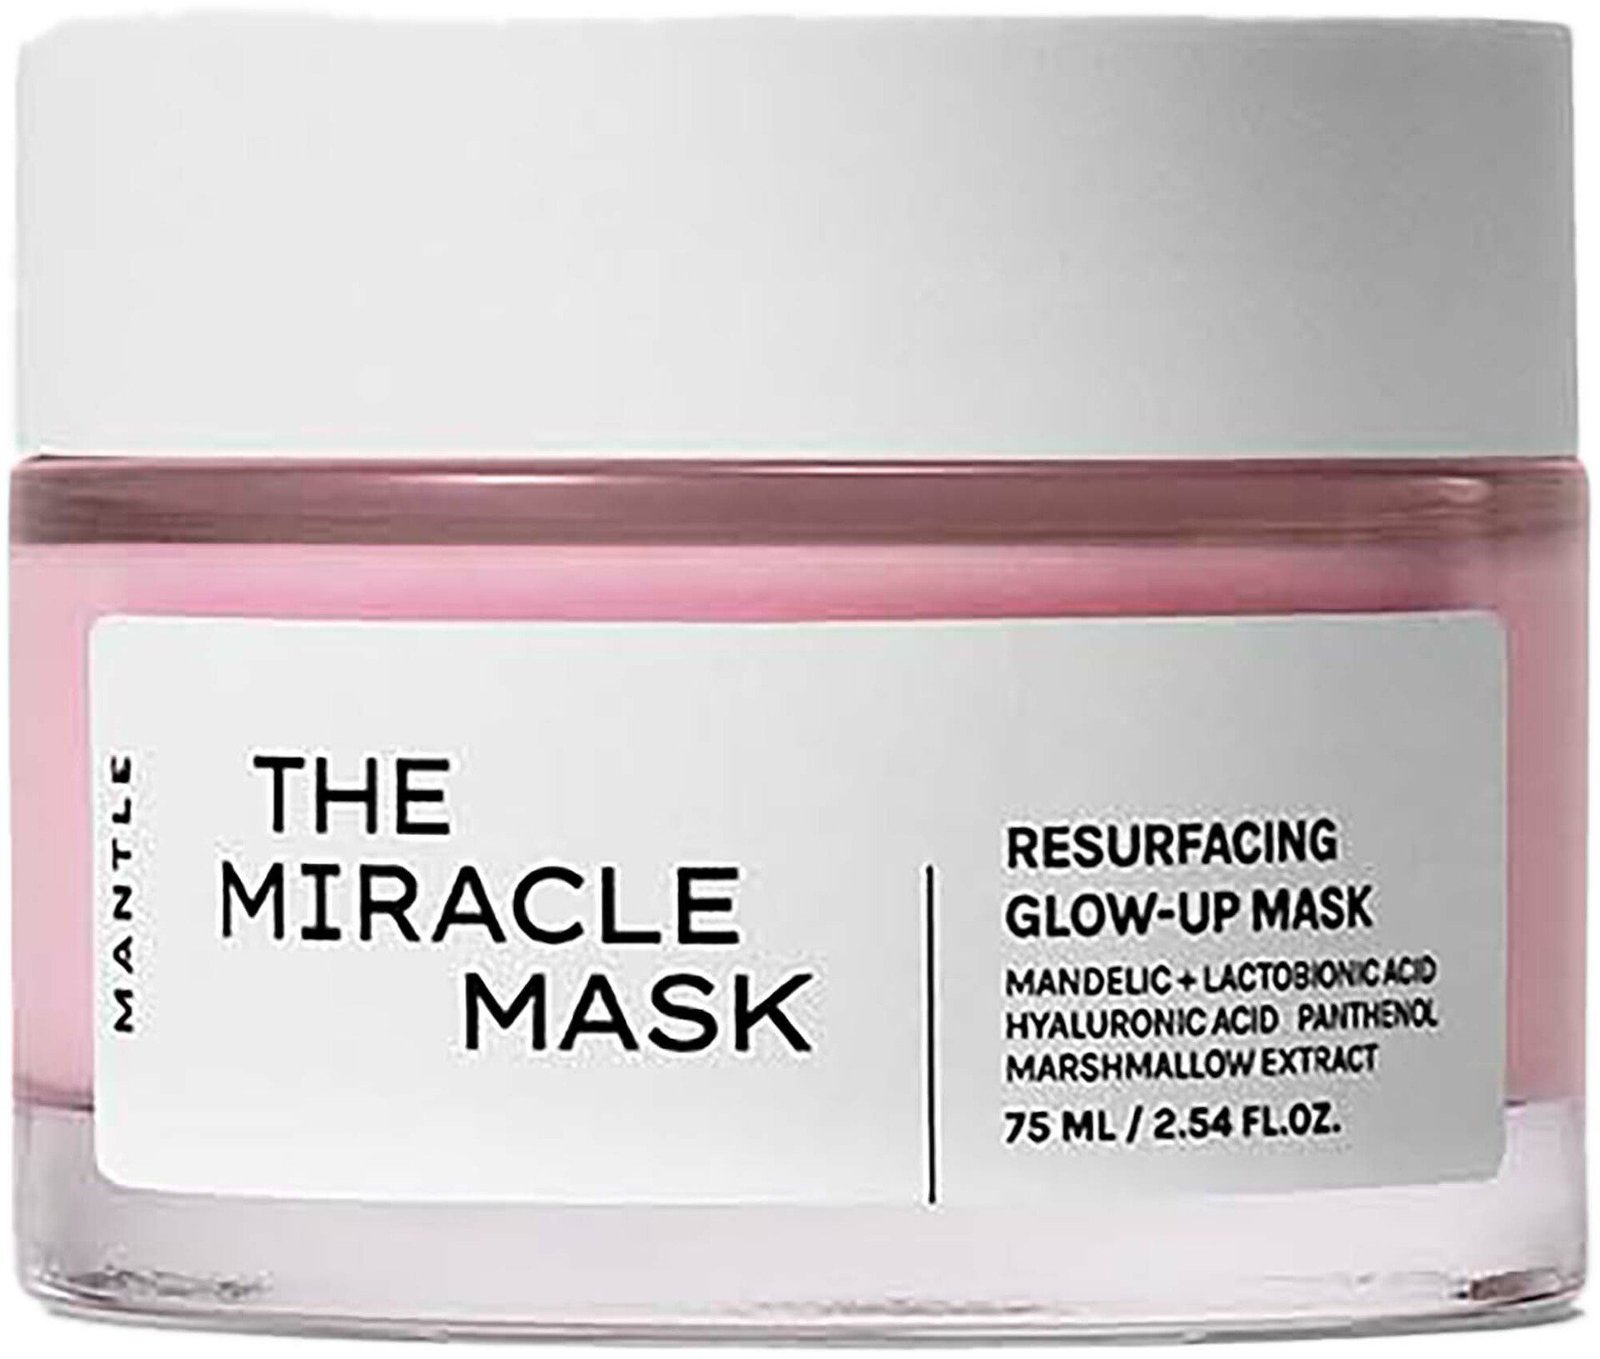 MANTLE The Miracle Mask Resurfacing glow-up mask 75ml